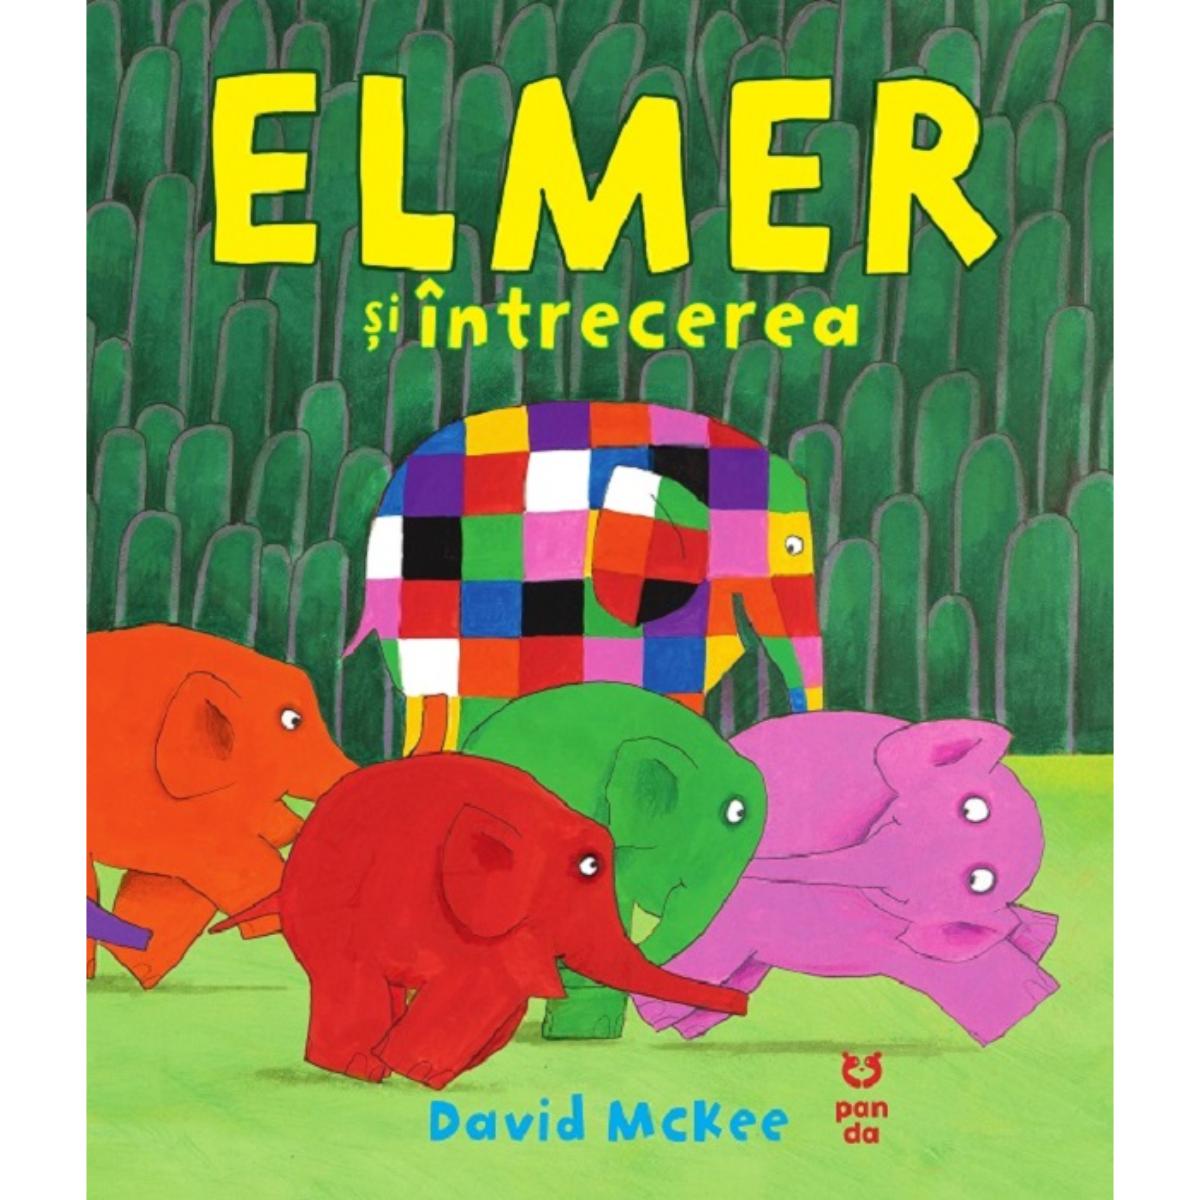 Elmer si intrecerea, David Mckee